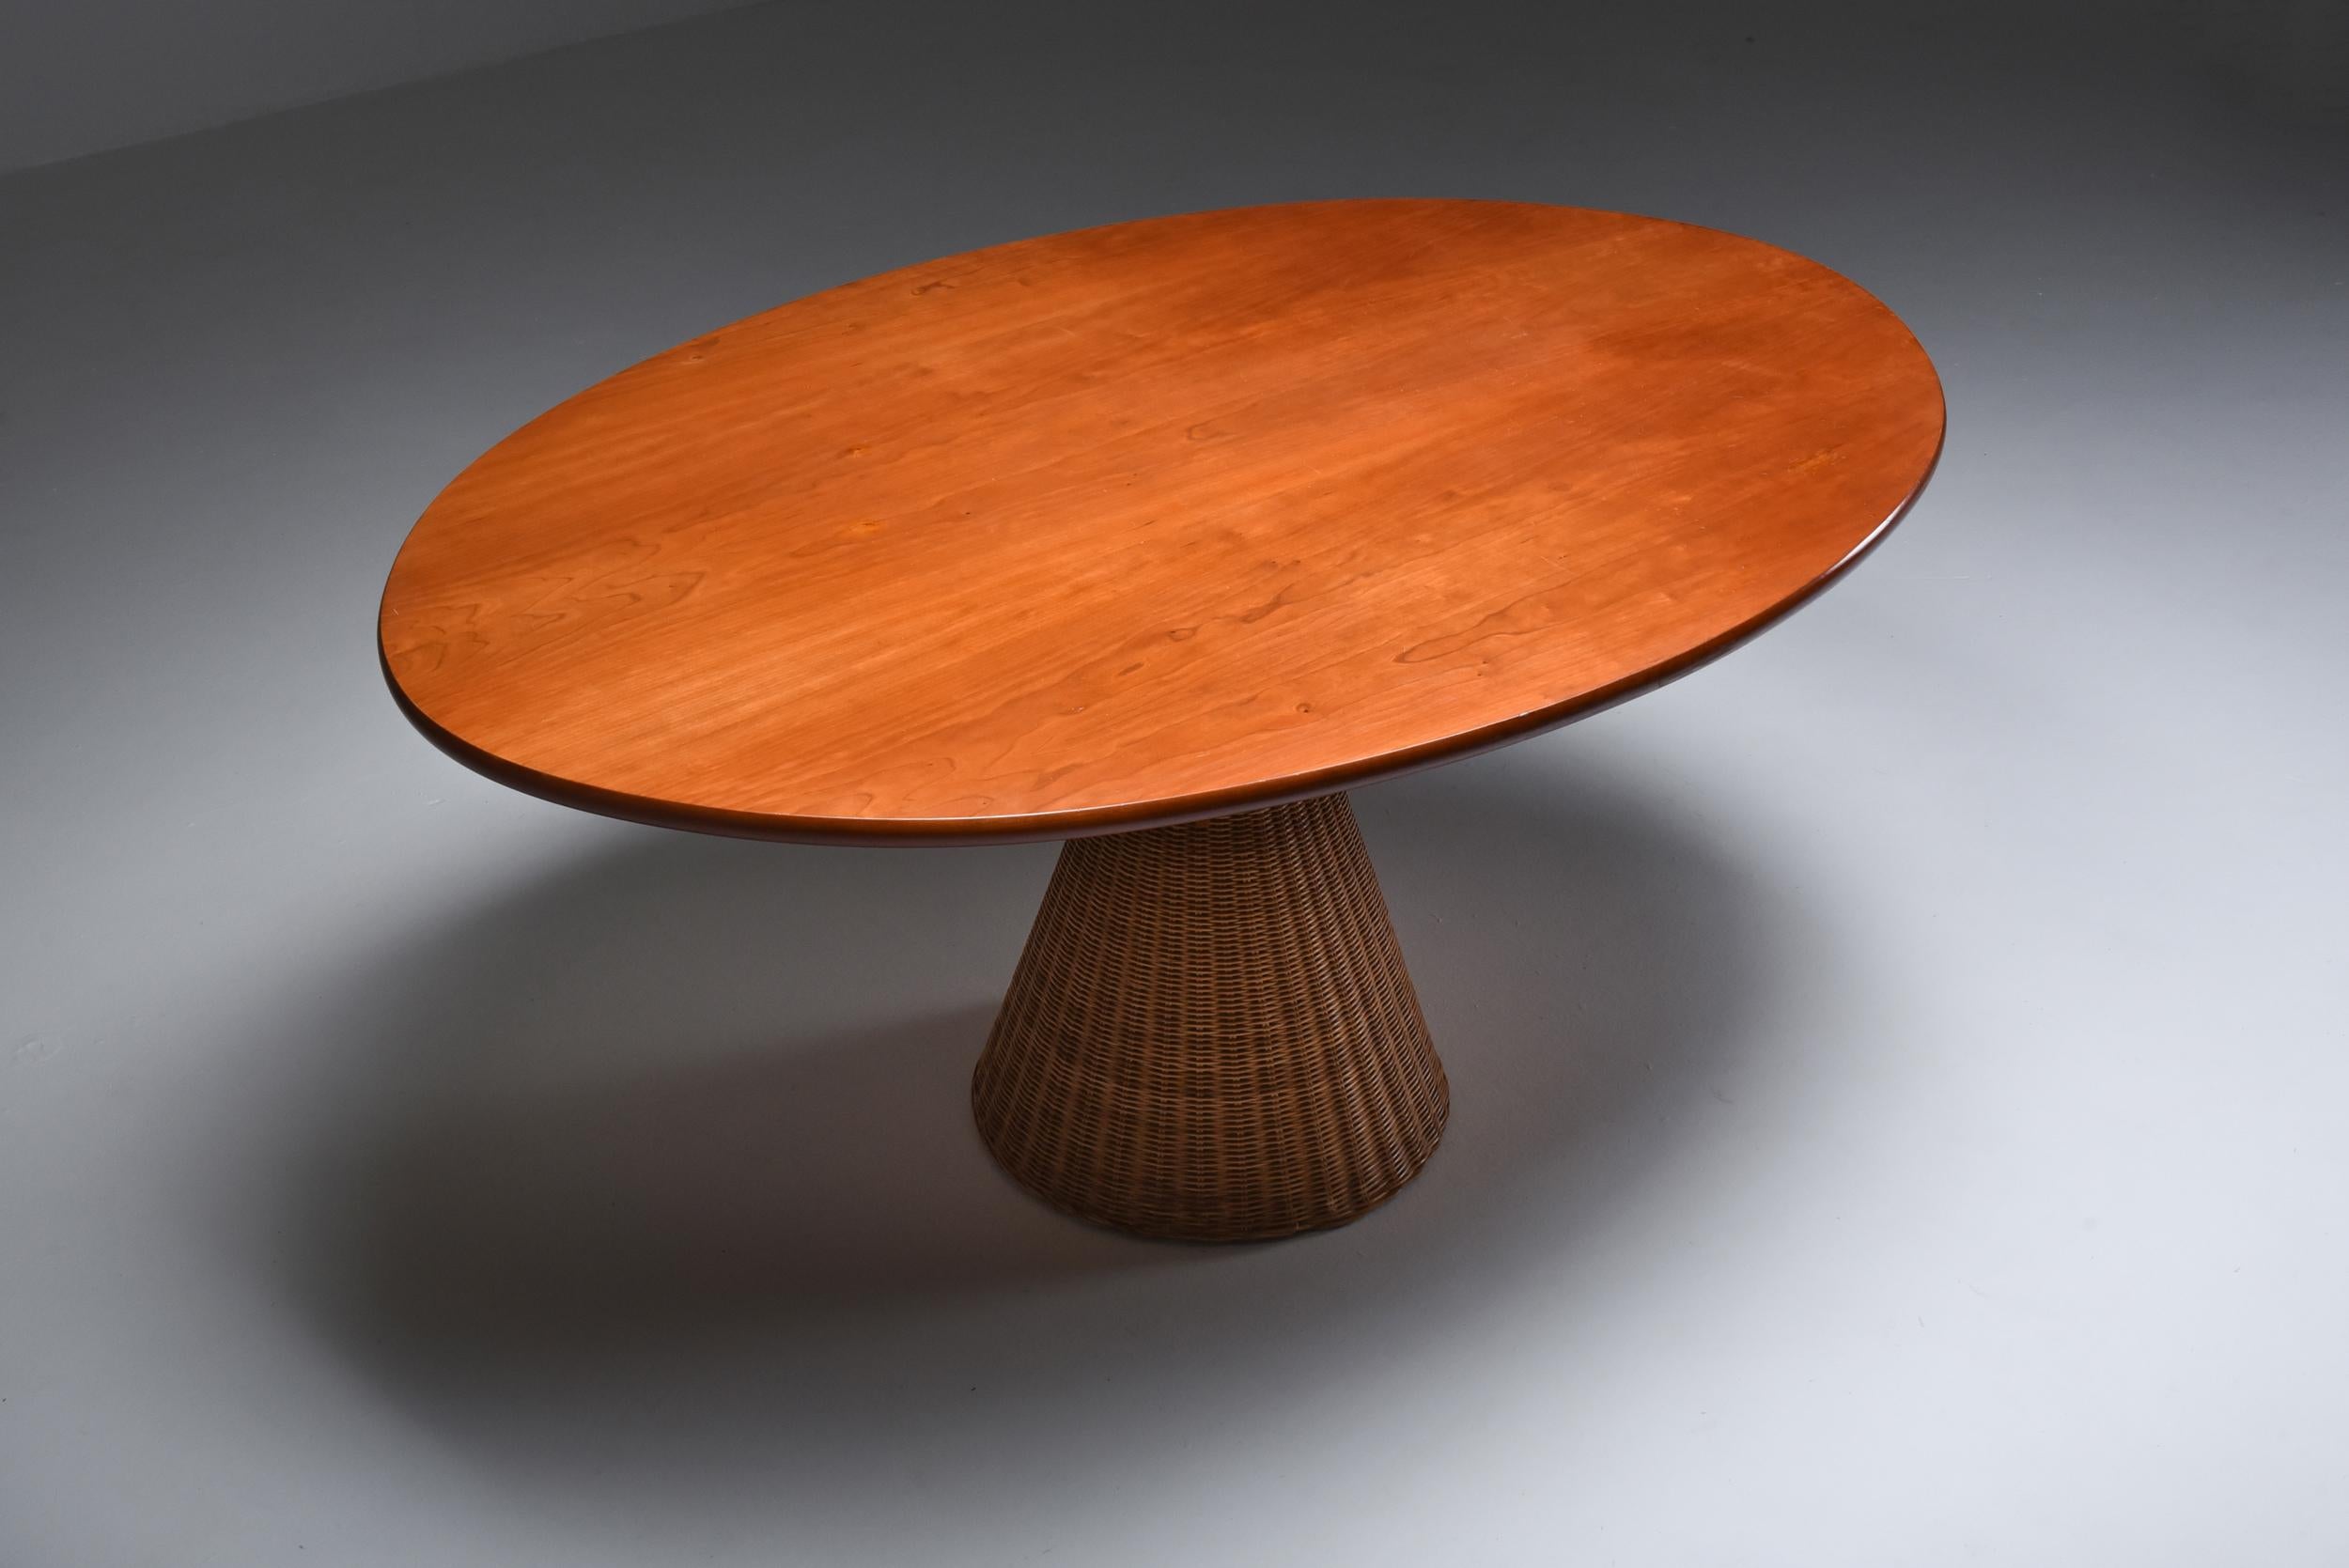 Late 20th Century Italian Design Oval Mid-Century Modern Dining Table on a Rattan Base